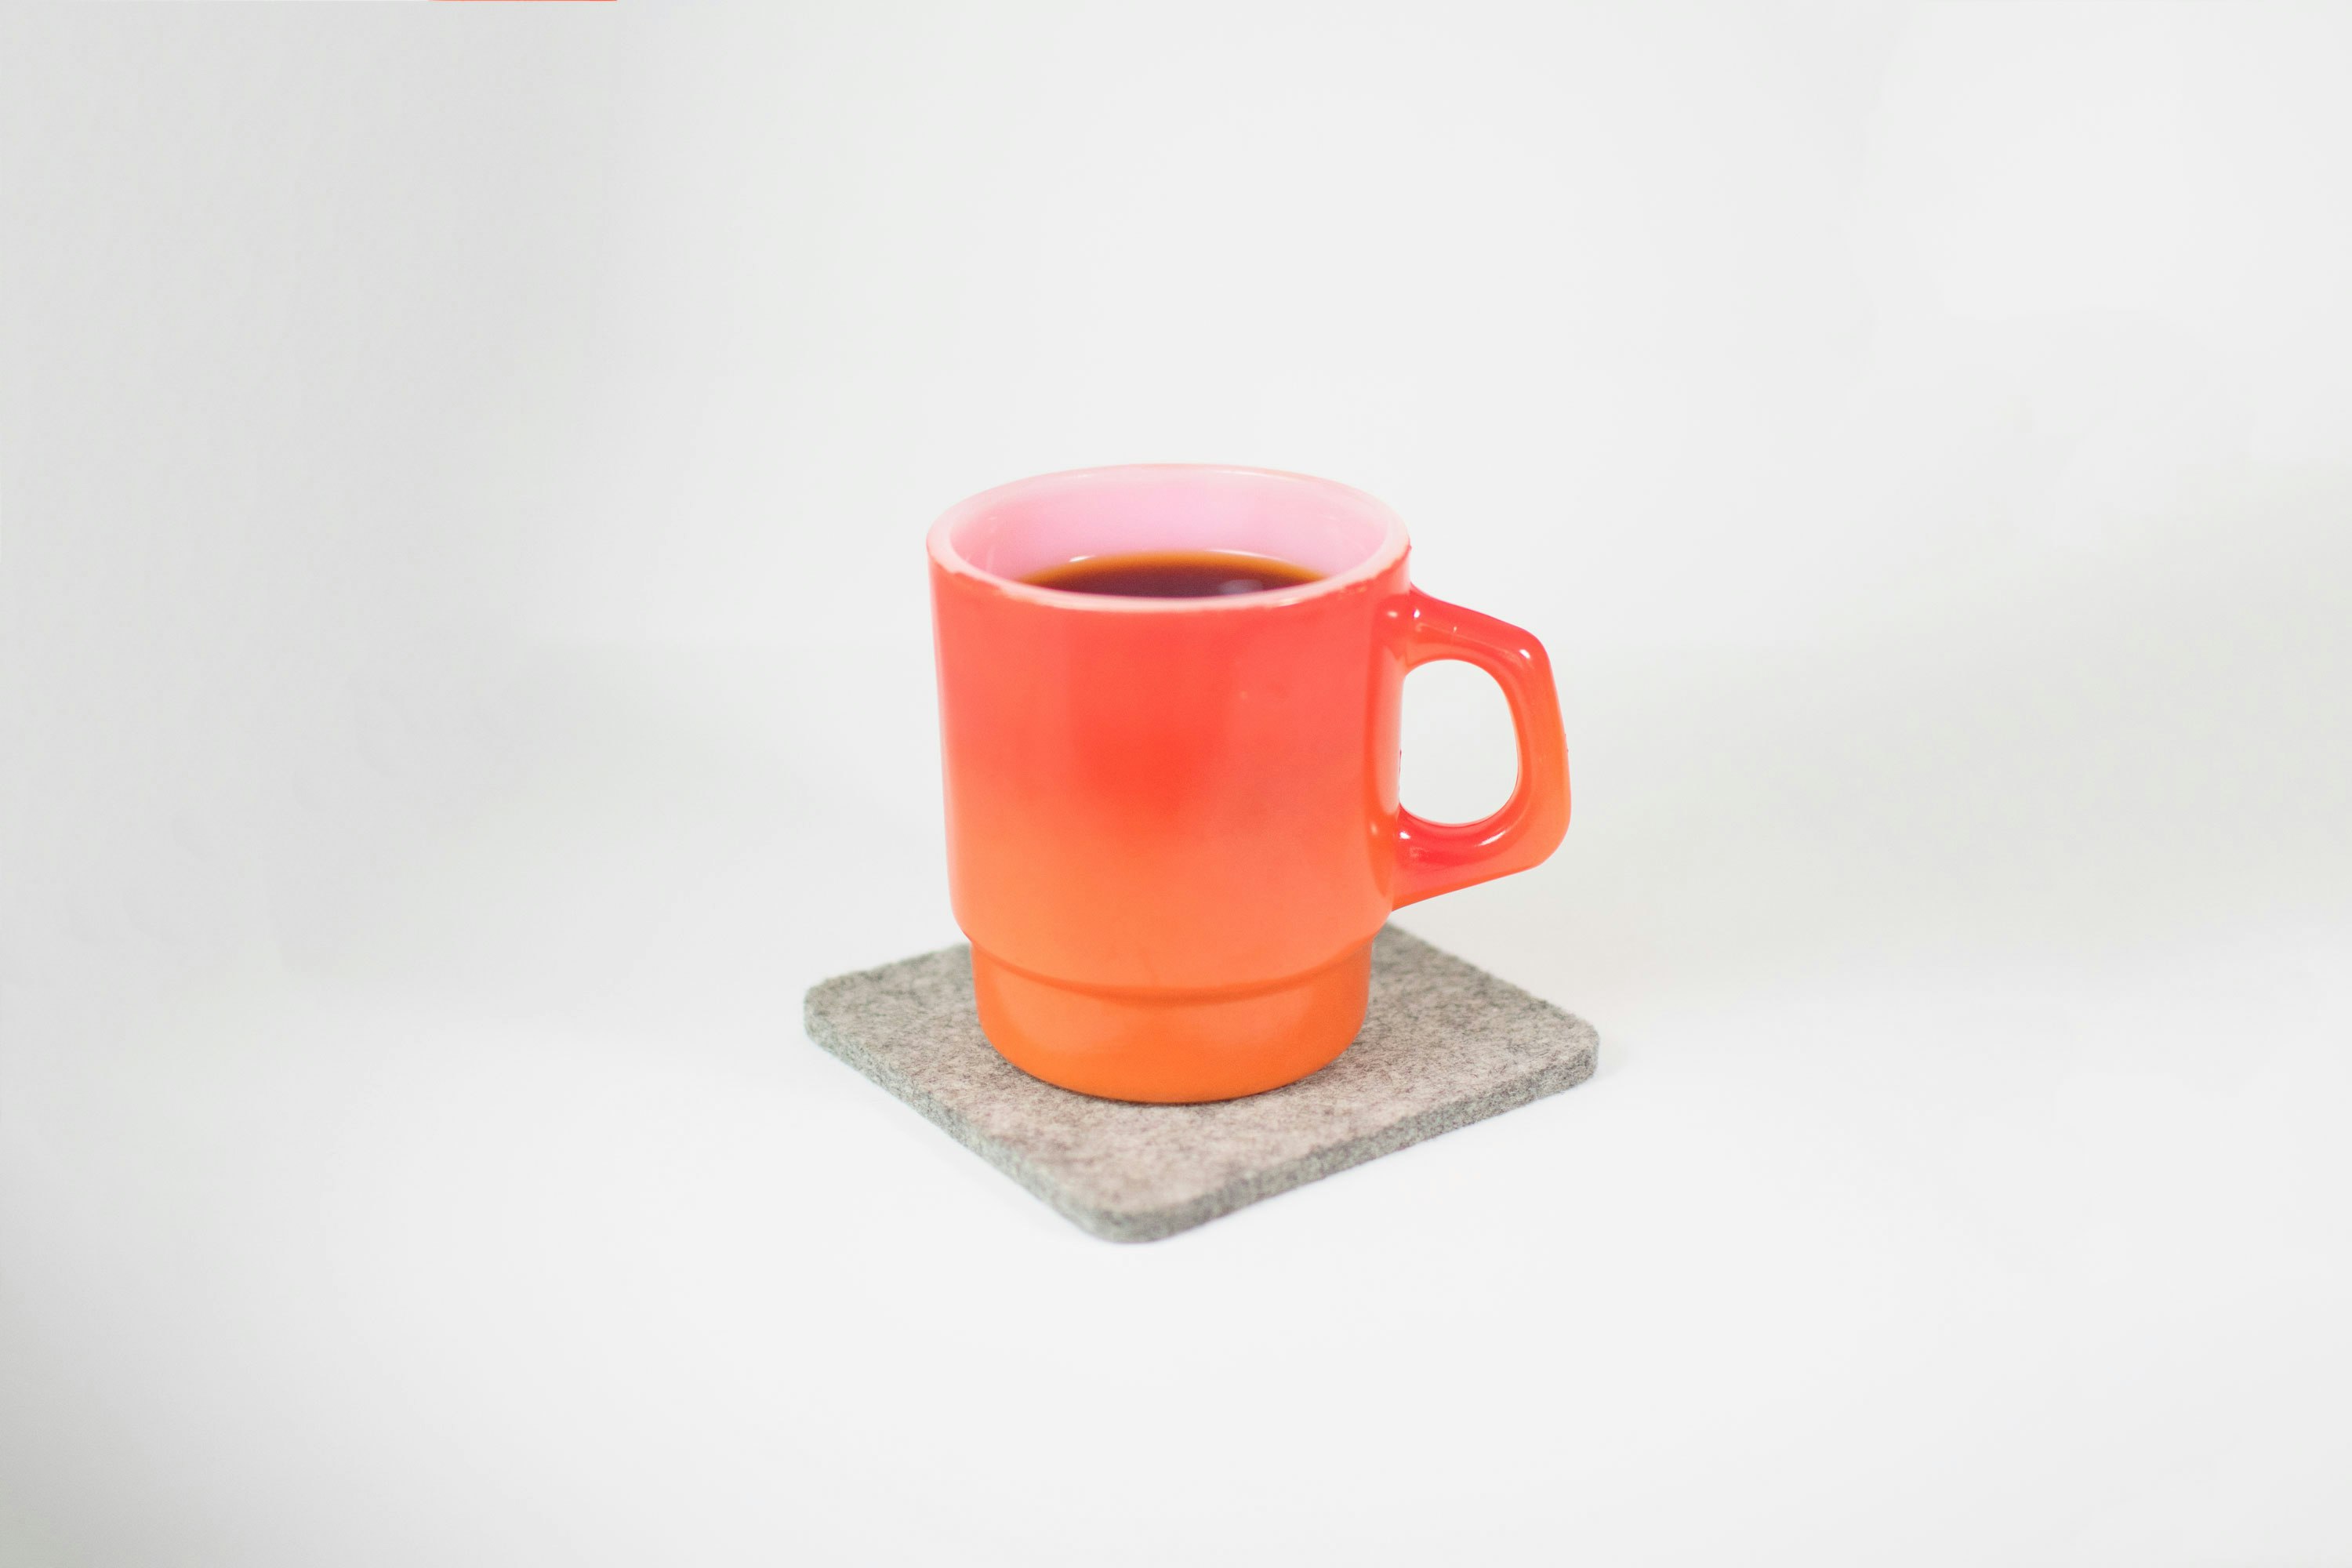 orange mug filled with black liquid